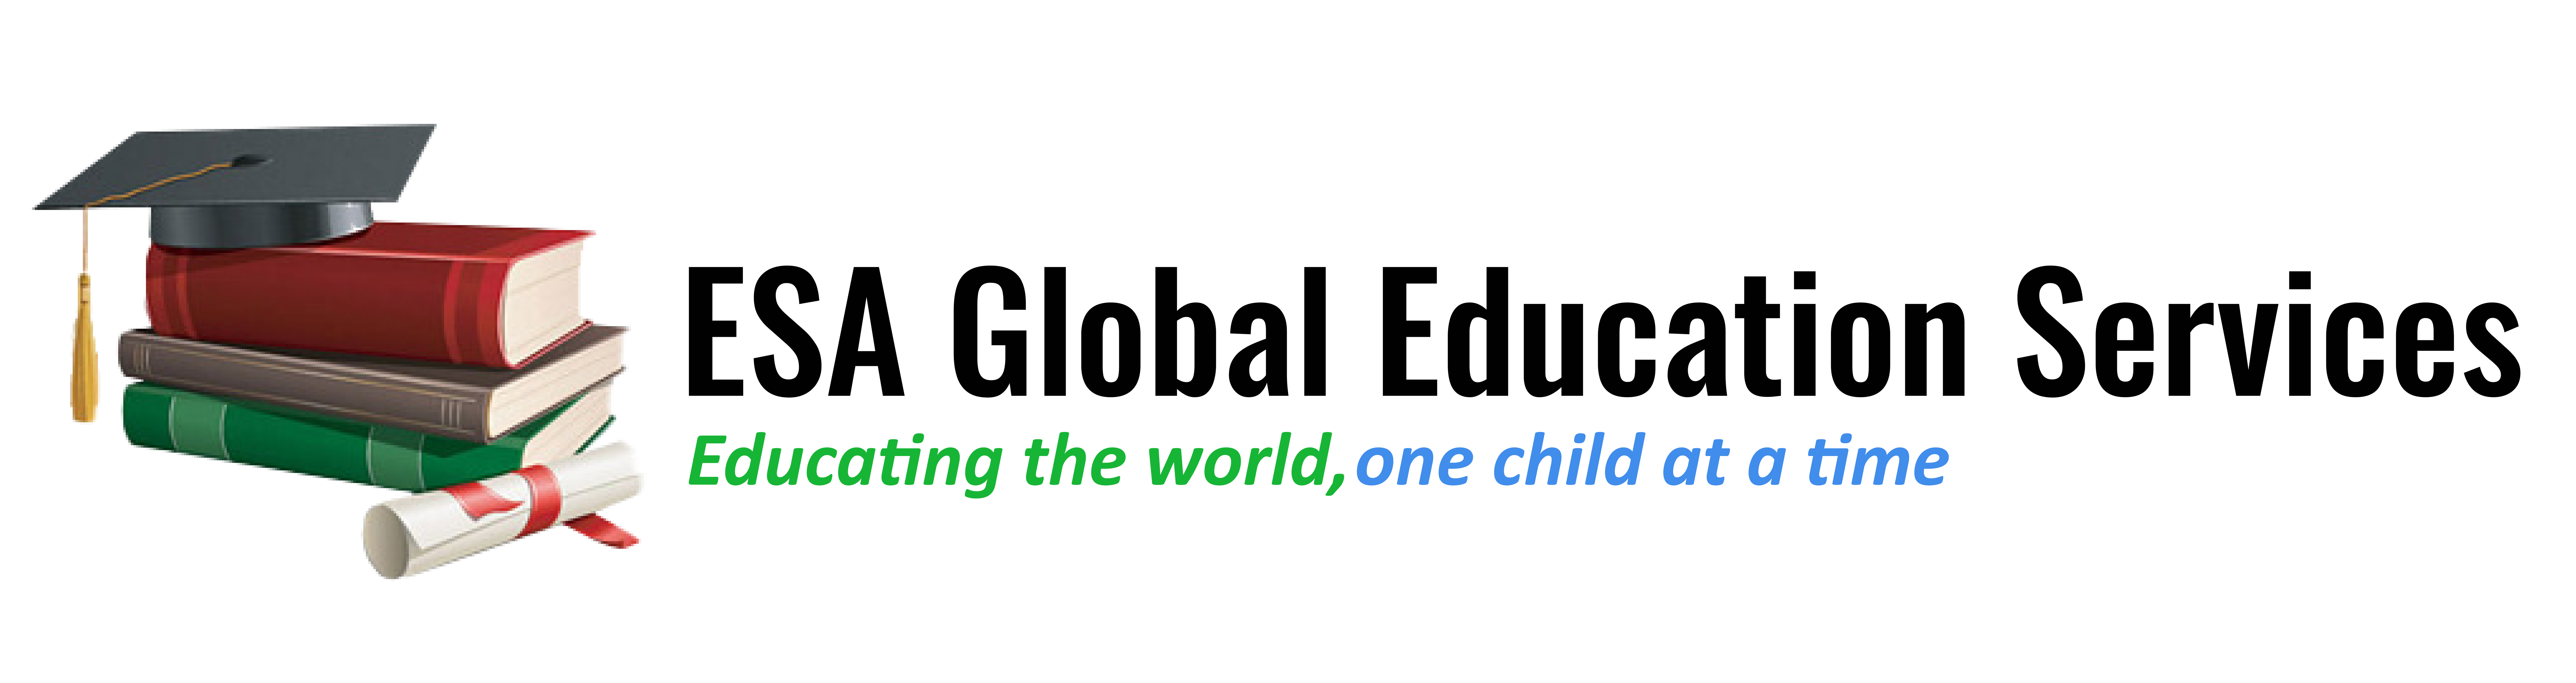 ESA Global Education Services